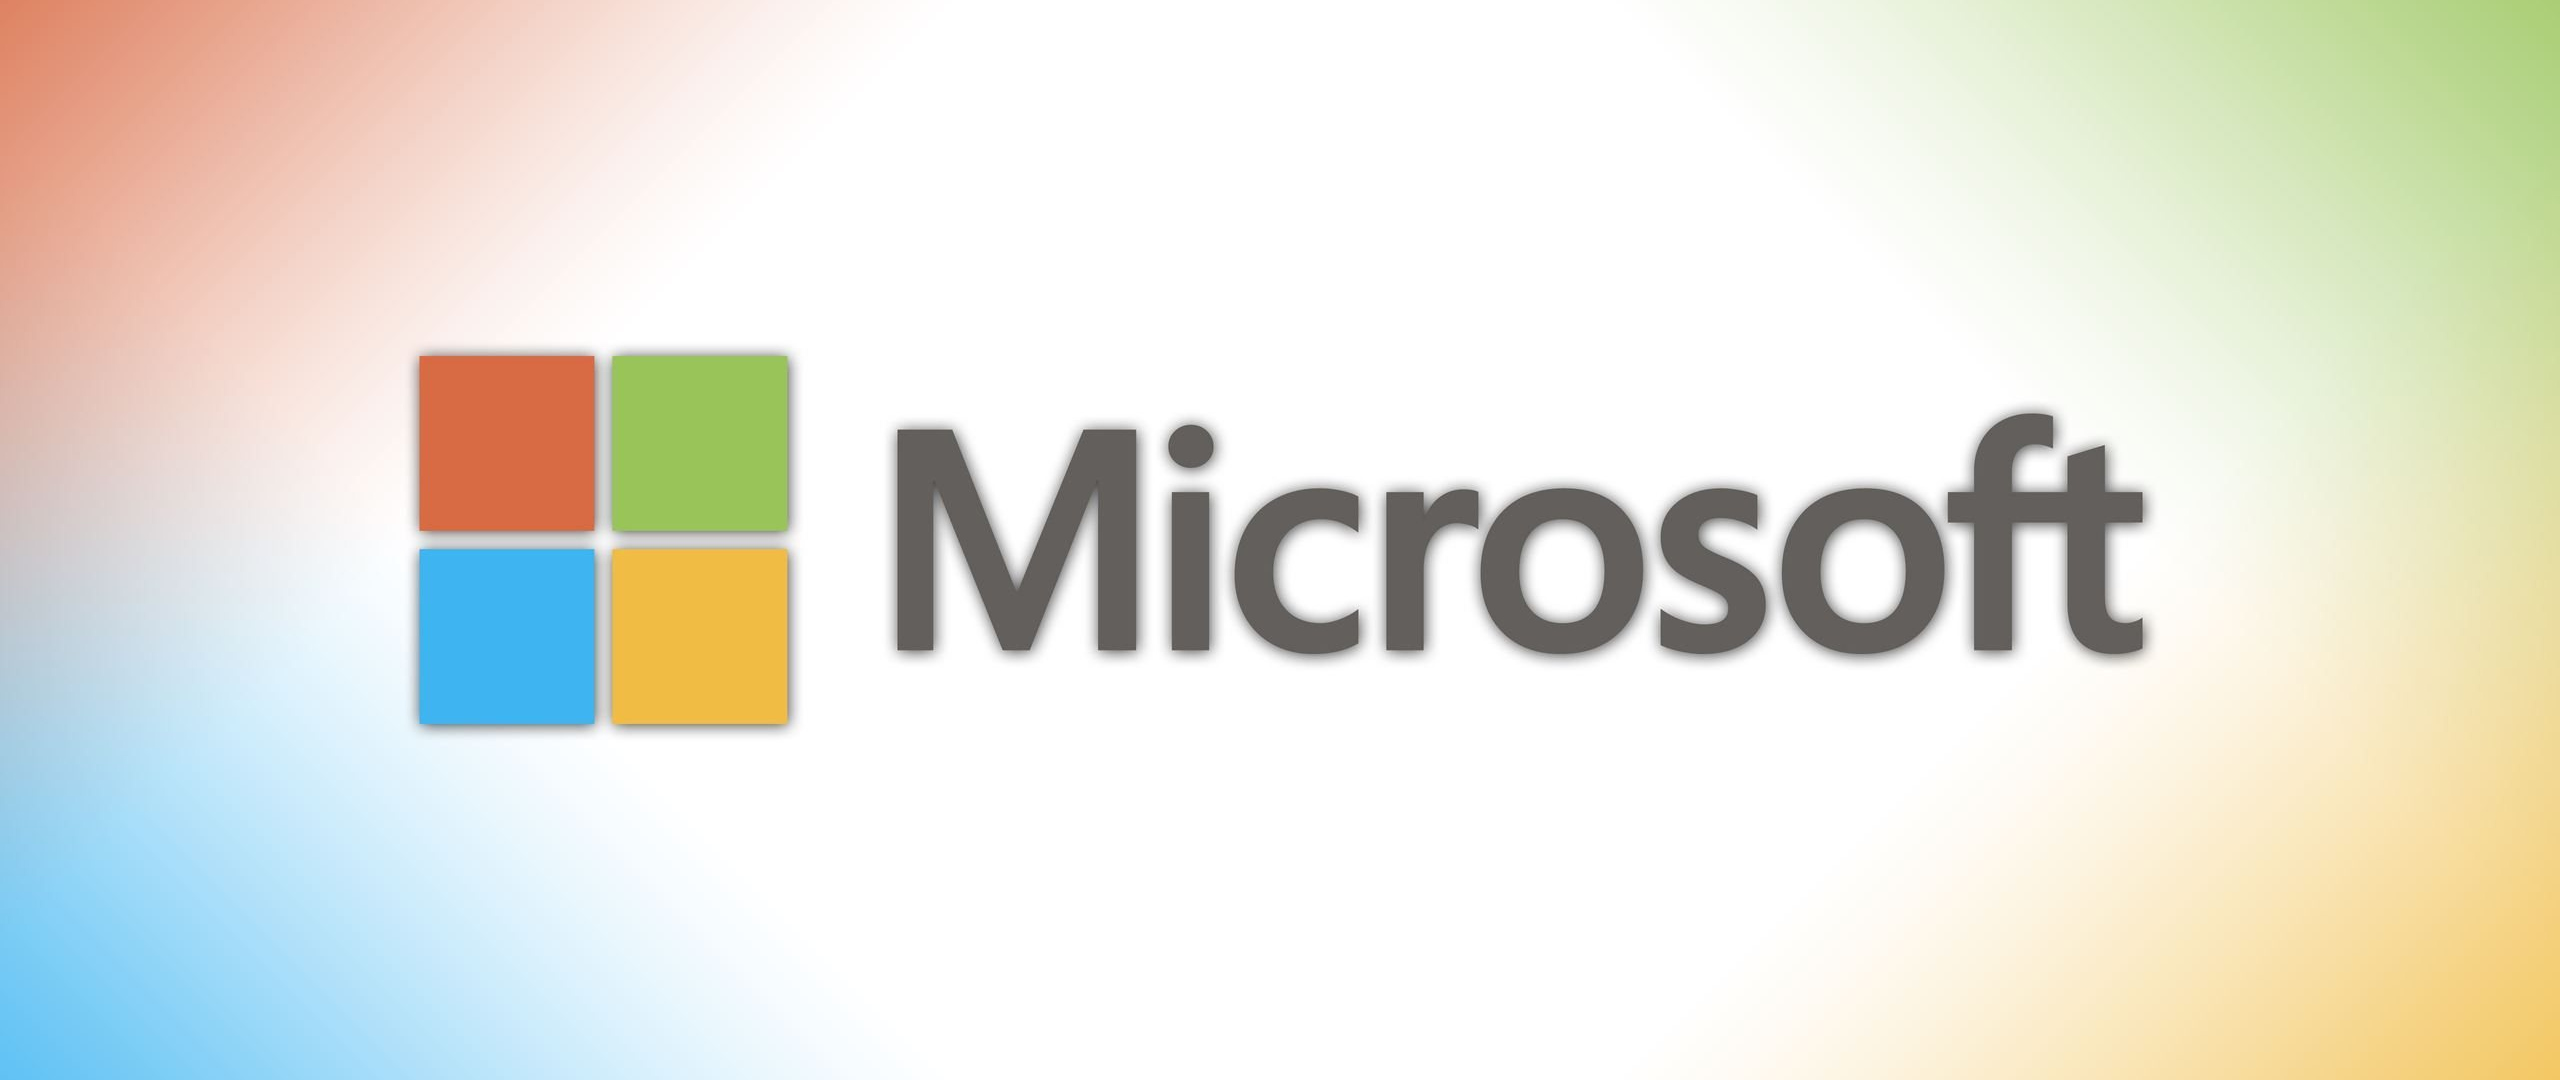 Download Microsoft Logo, Microsoft, Logo Wallpaper in 2560x1080 ...